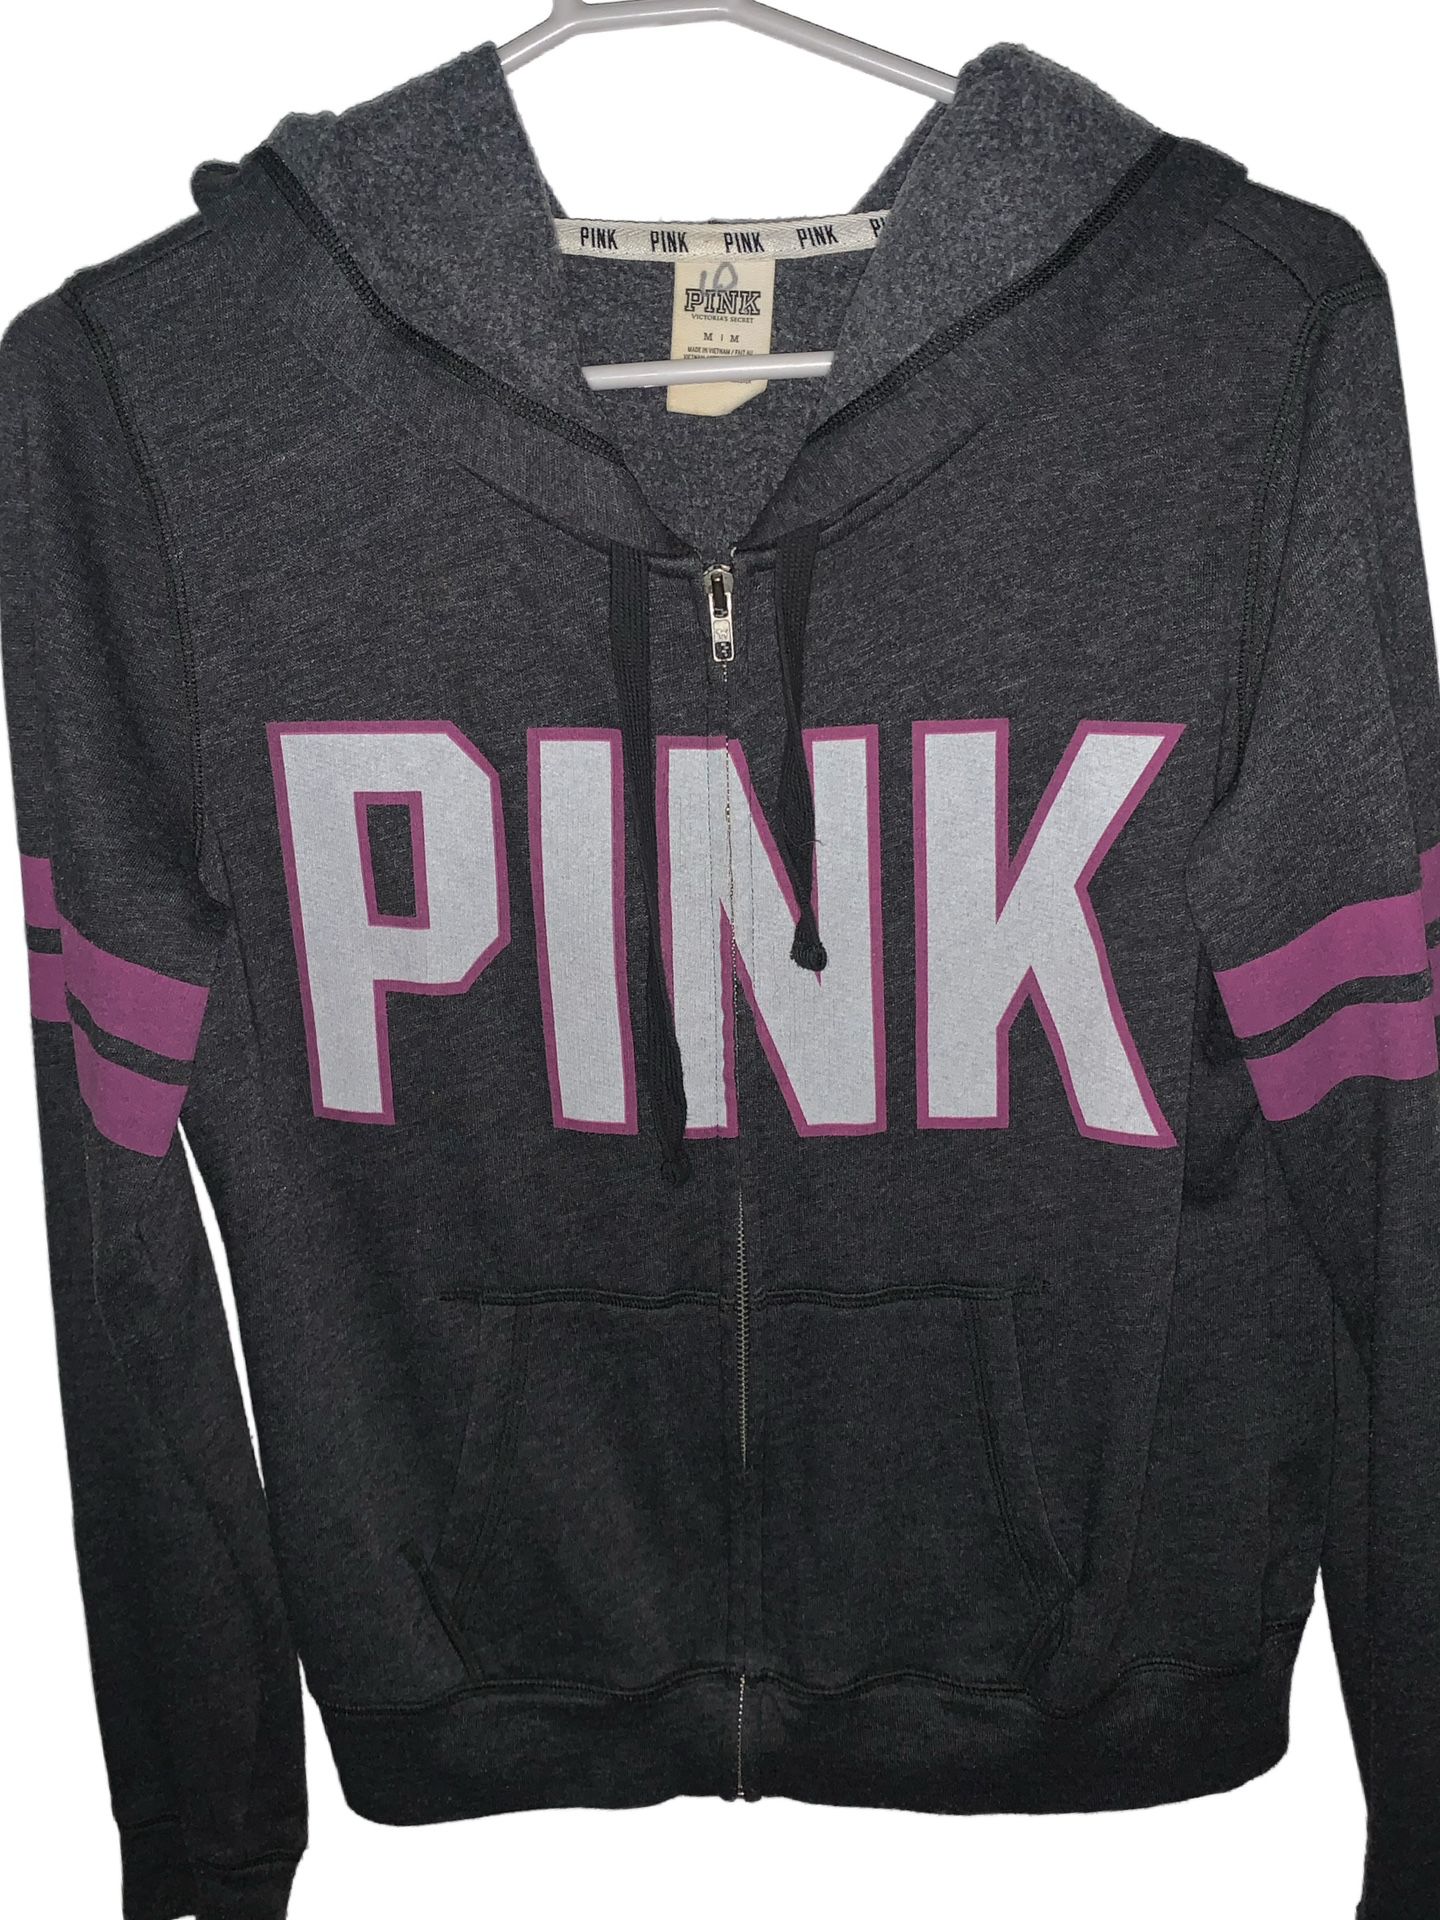 Pink Hooded Zip Up Jacket Size Medium 